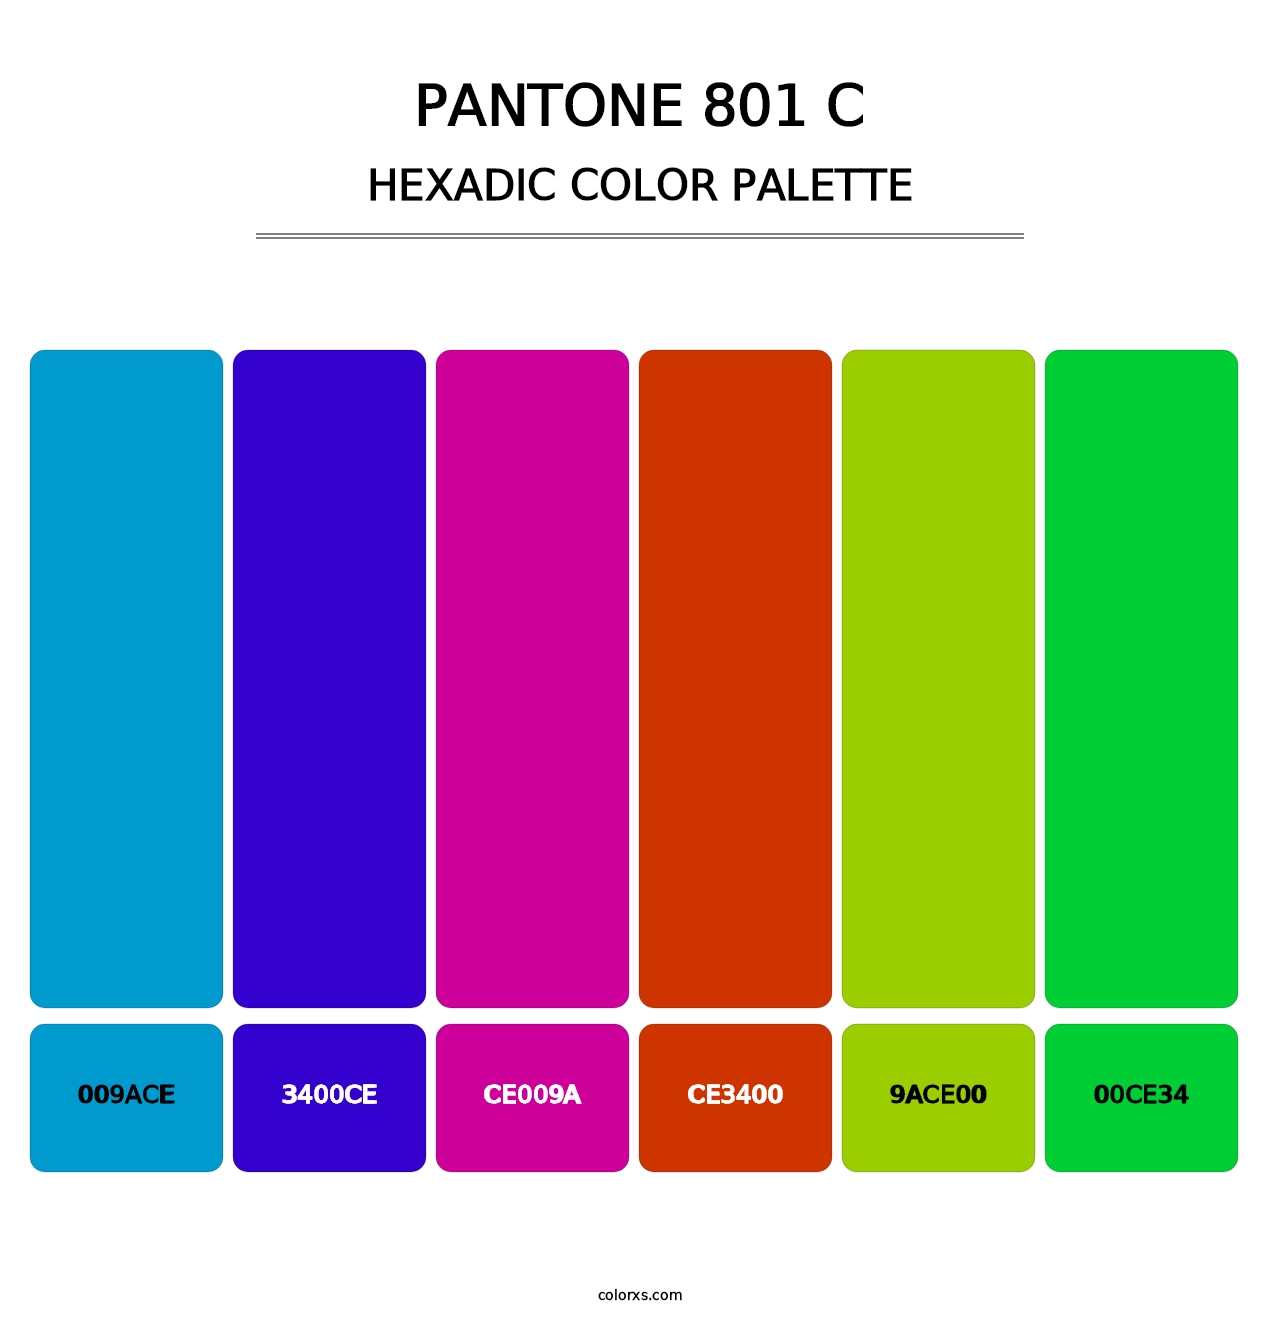 PANTONE 801 C - Hexadic Color Palette